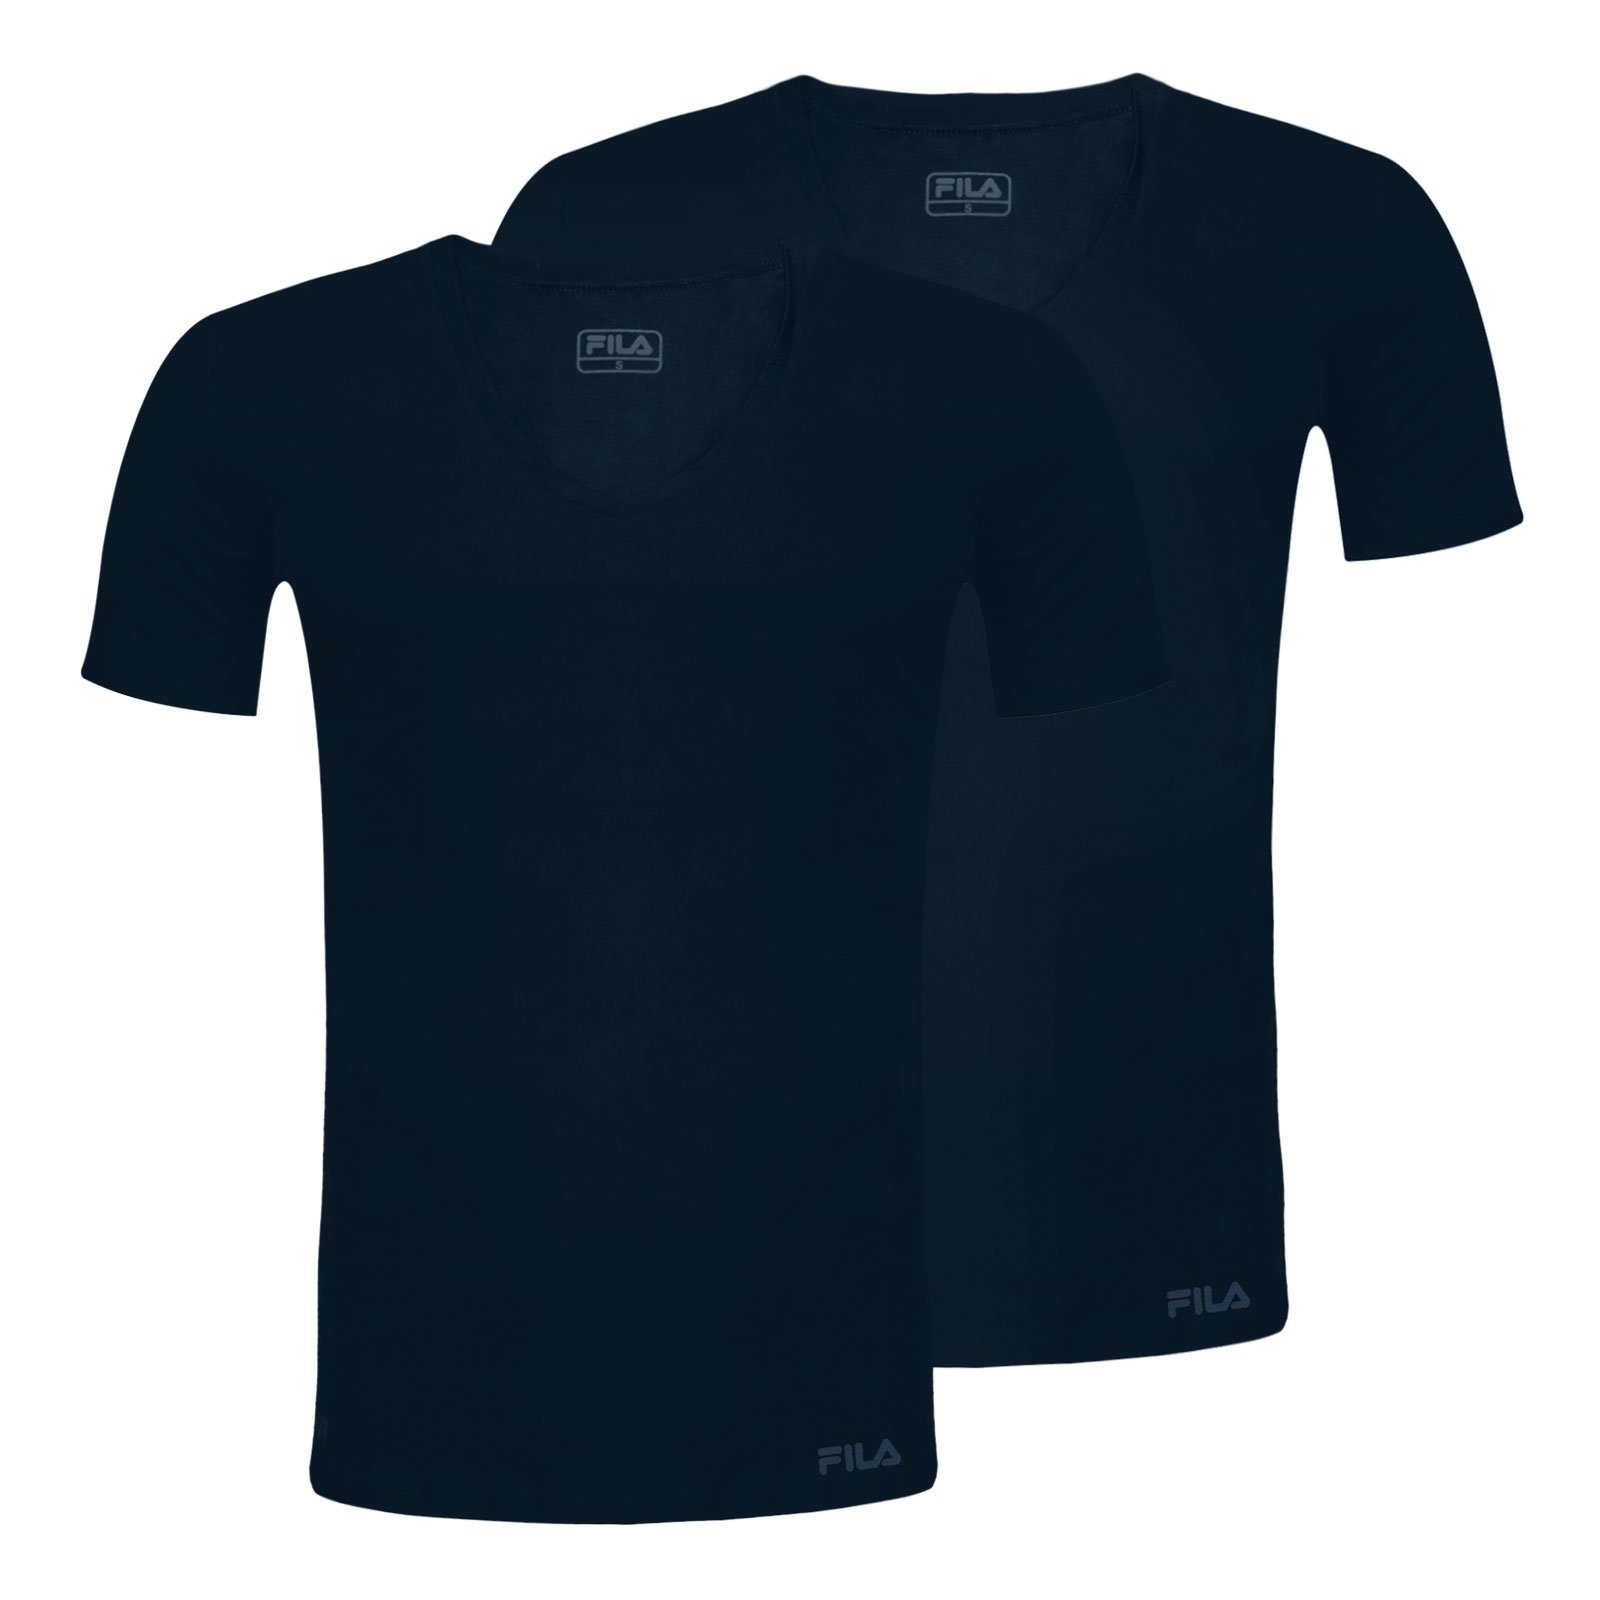 2er T-Shirt aus 321 navy Fila Pack V-Neck weichem Baumwolljersey